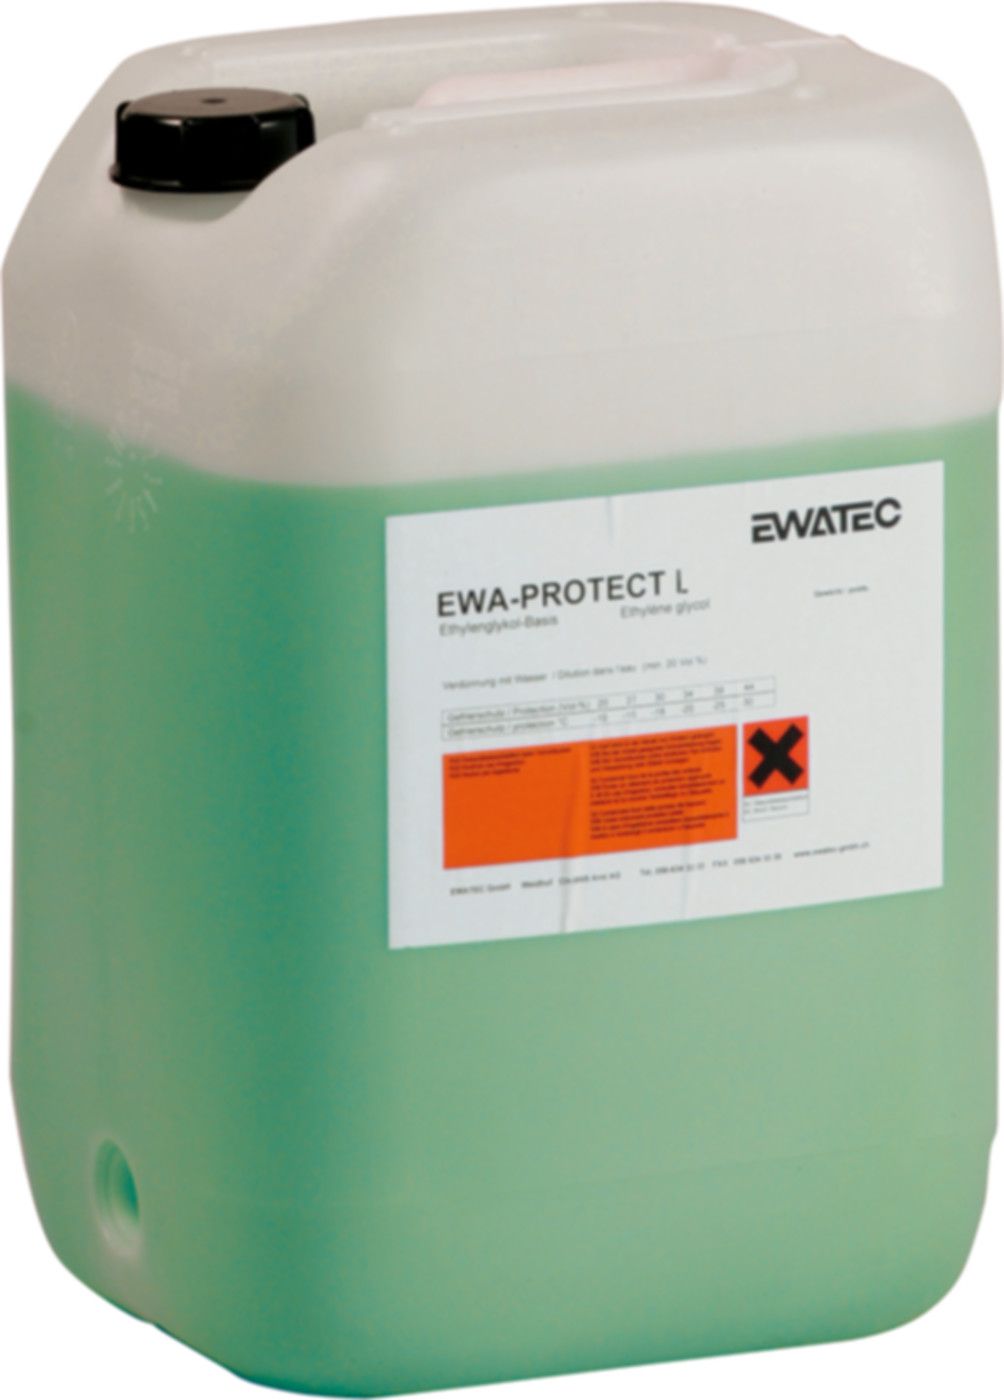 Frostschutz EWA-PROTECT SOL Bidon à 25kg Art.10.3022 - Ewatec Frostschutz